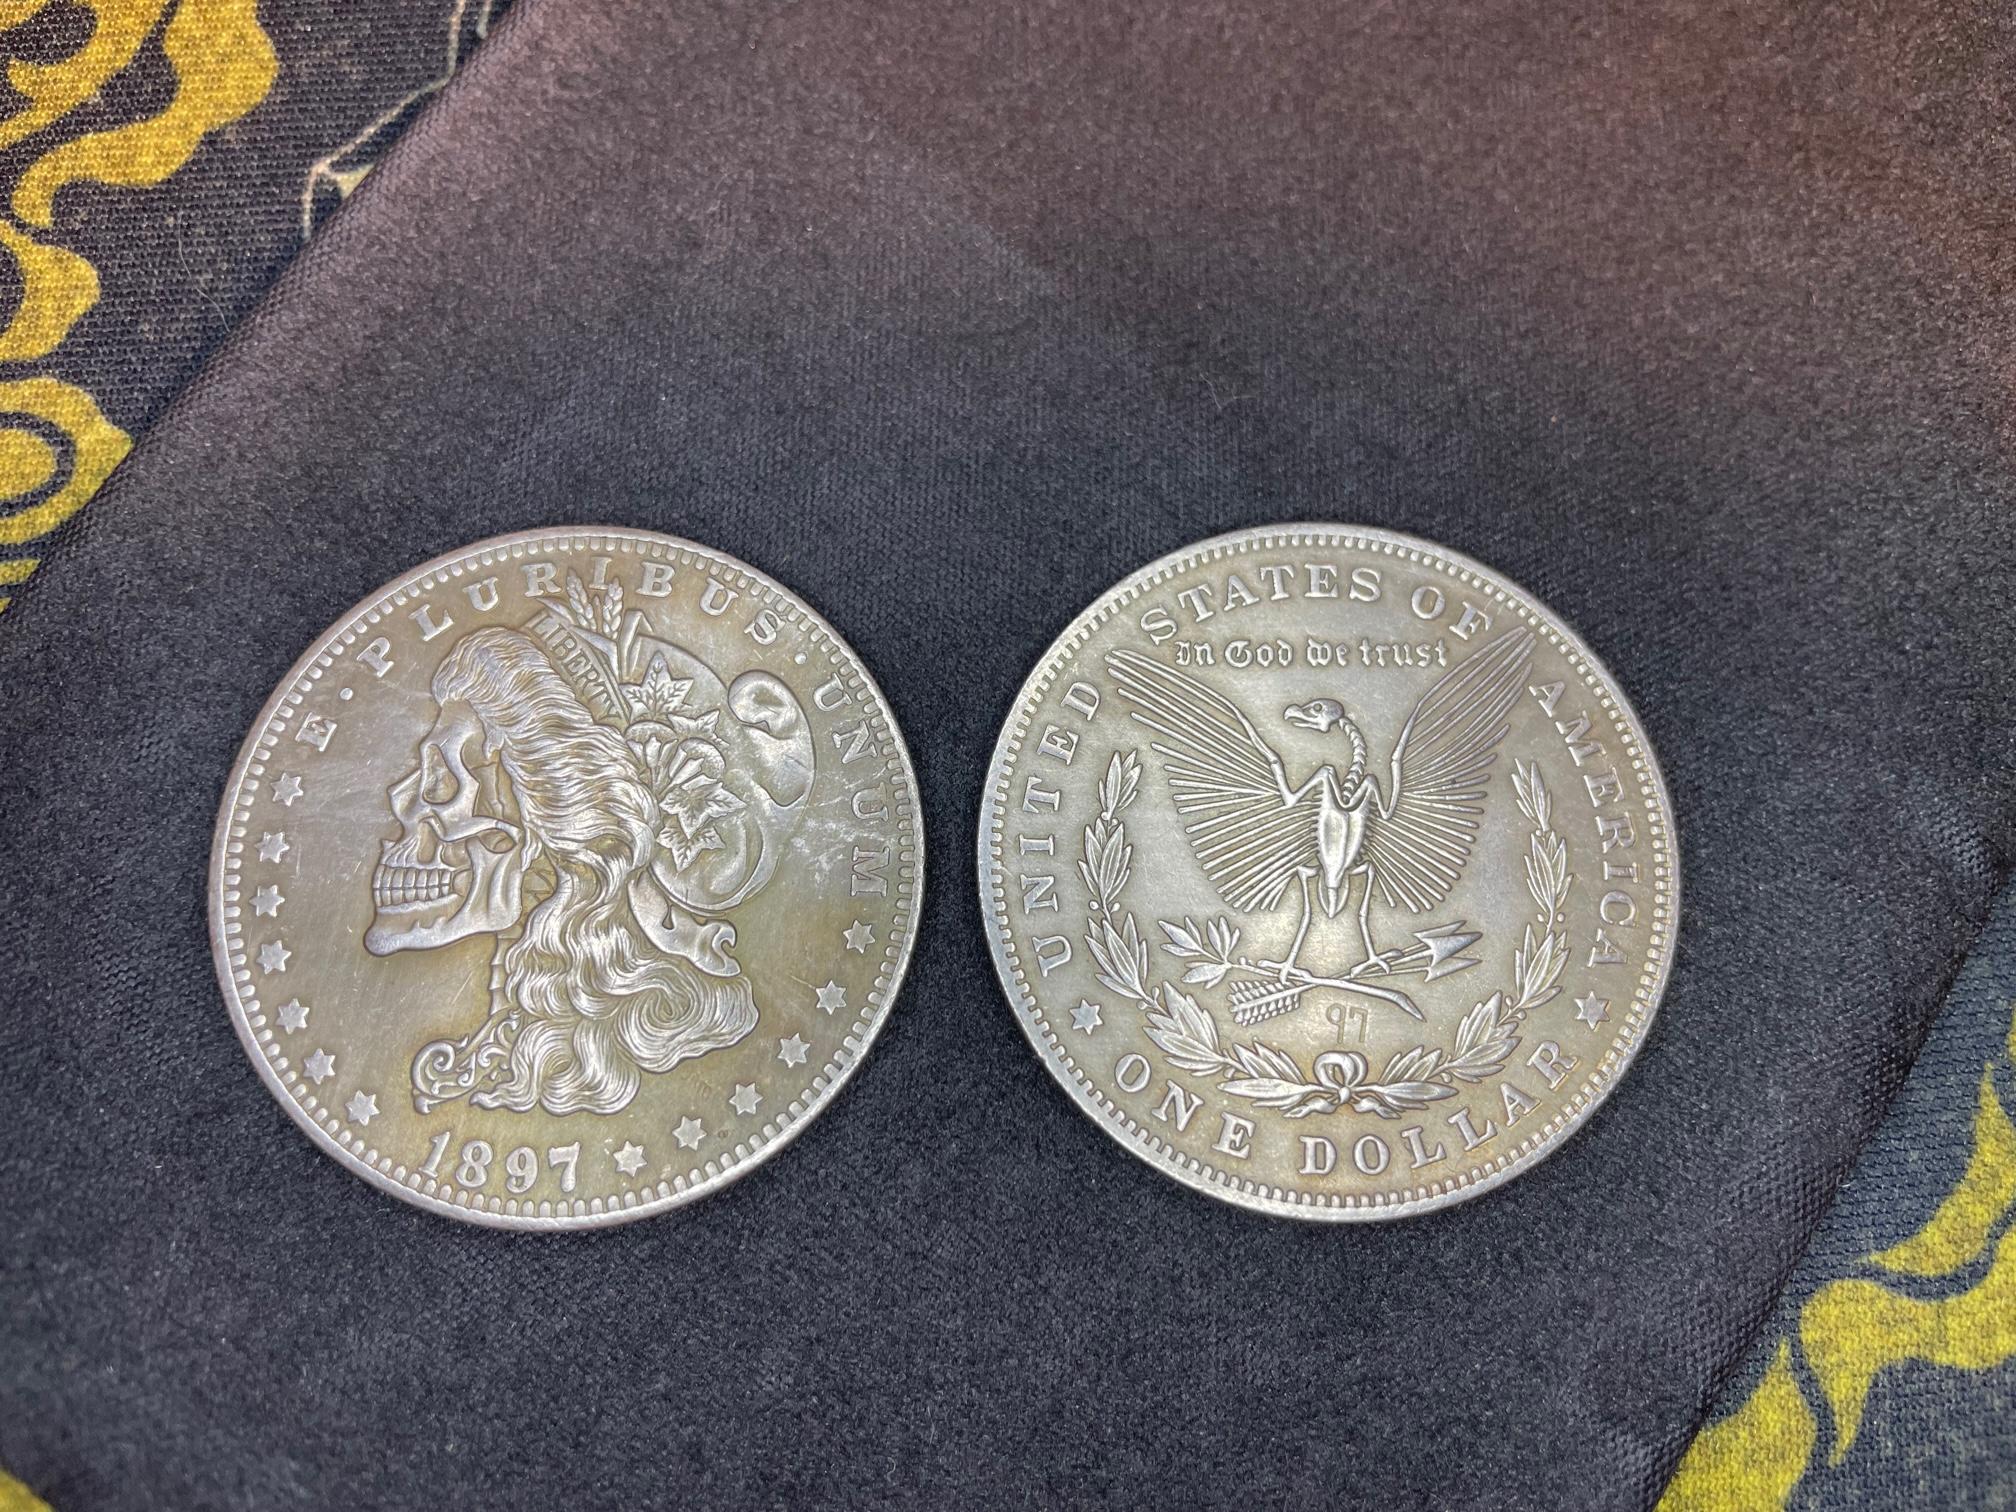 skeletonized custom morgan dollar 1897 mint coin usa liberty eagle star skull death angel